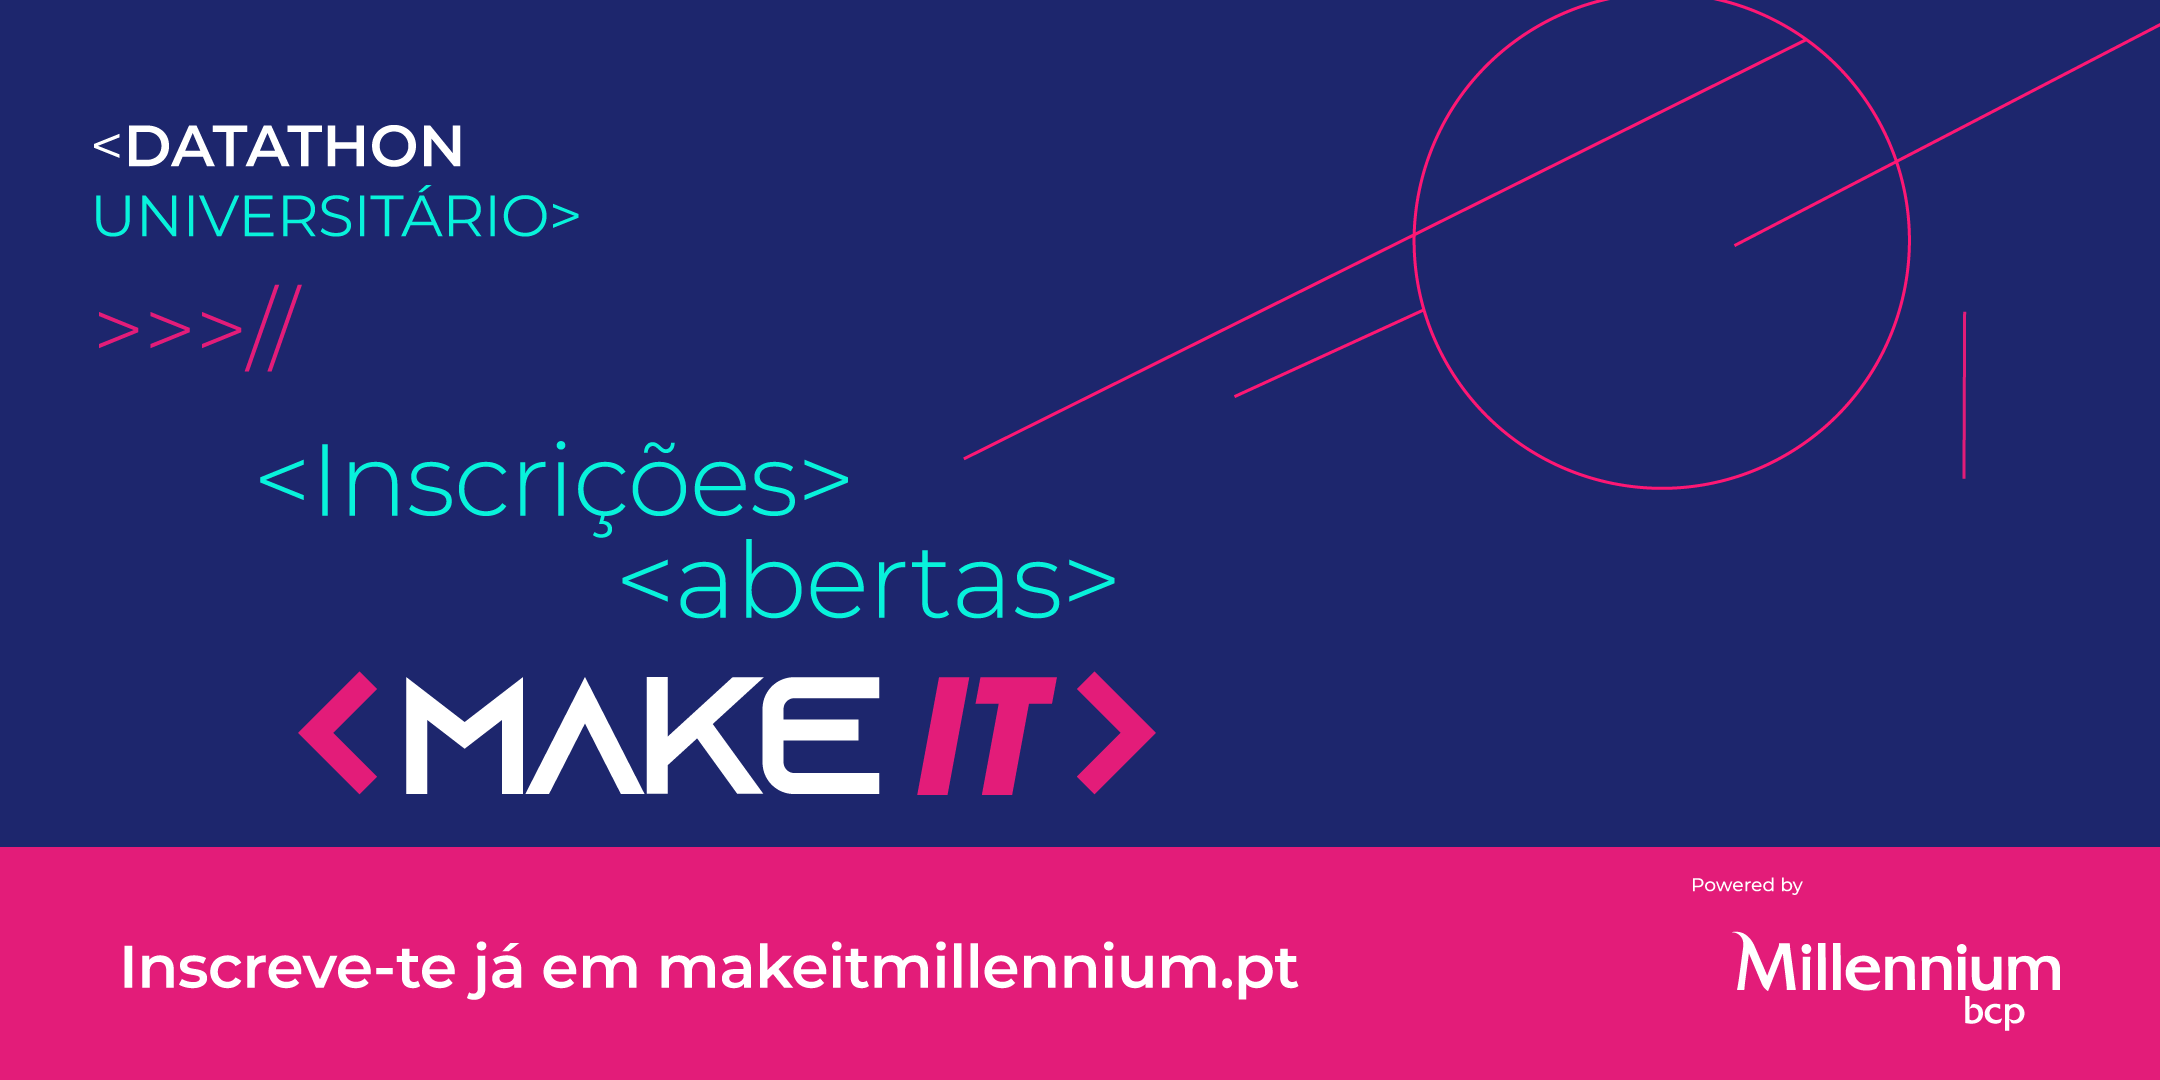 Make IT | Datathon Universitário